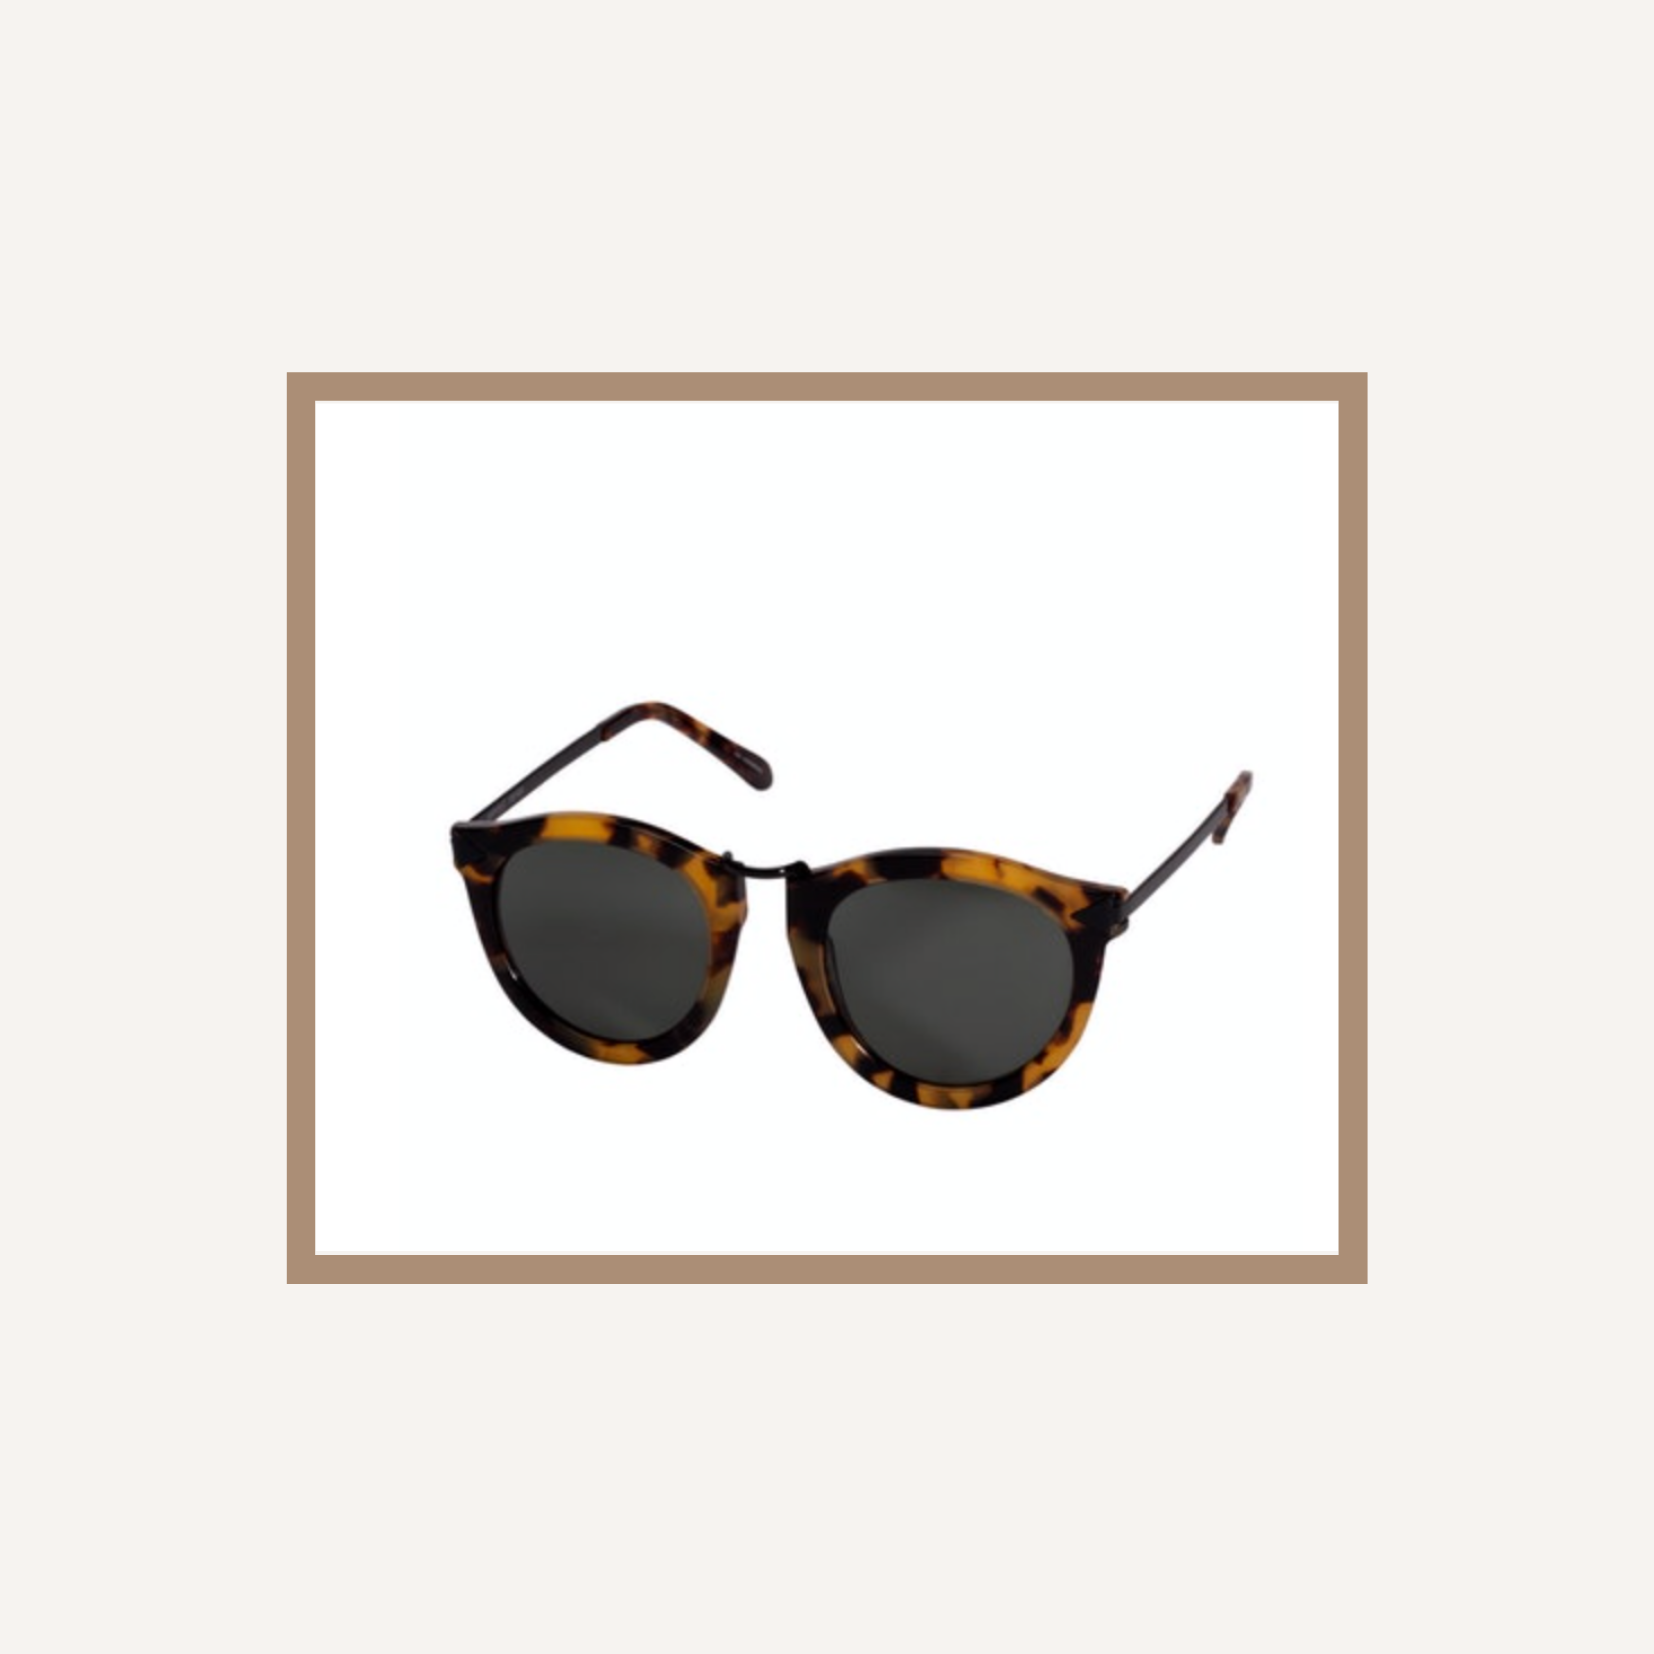 Favorite Sunglasses for All Seasons | Karen Walker Sunglasses | Louella Reese